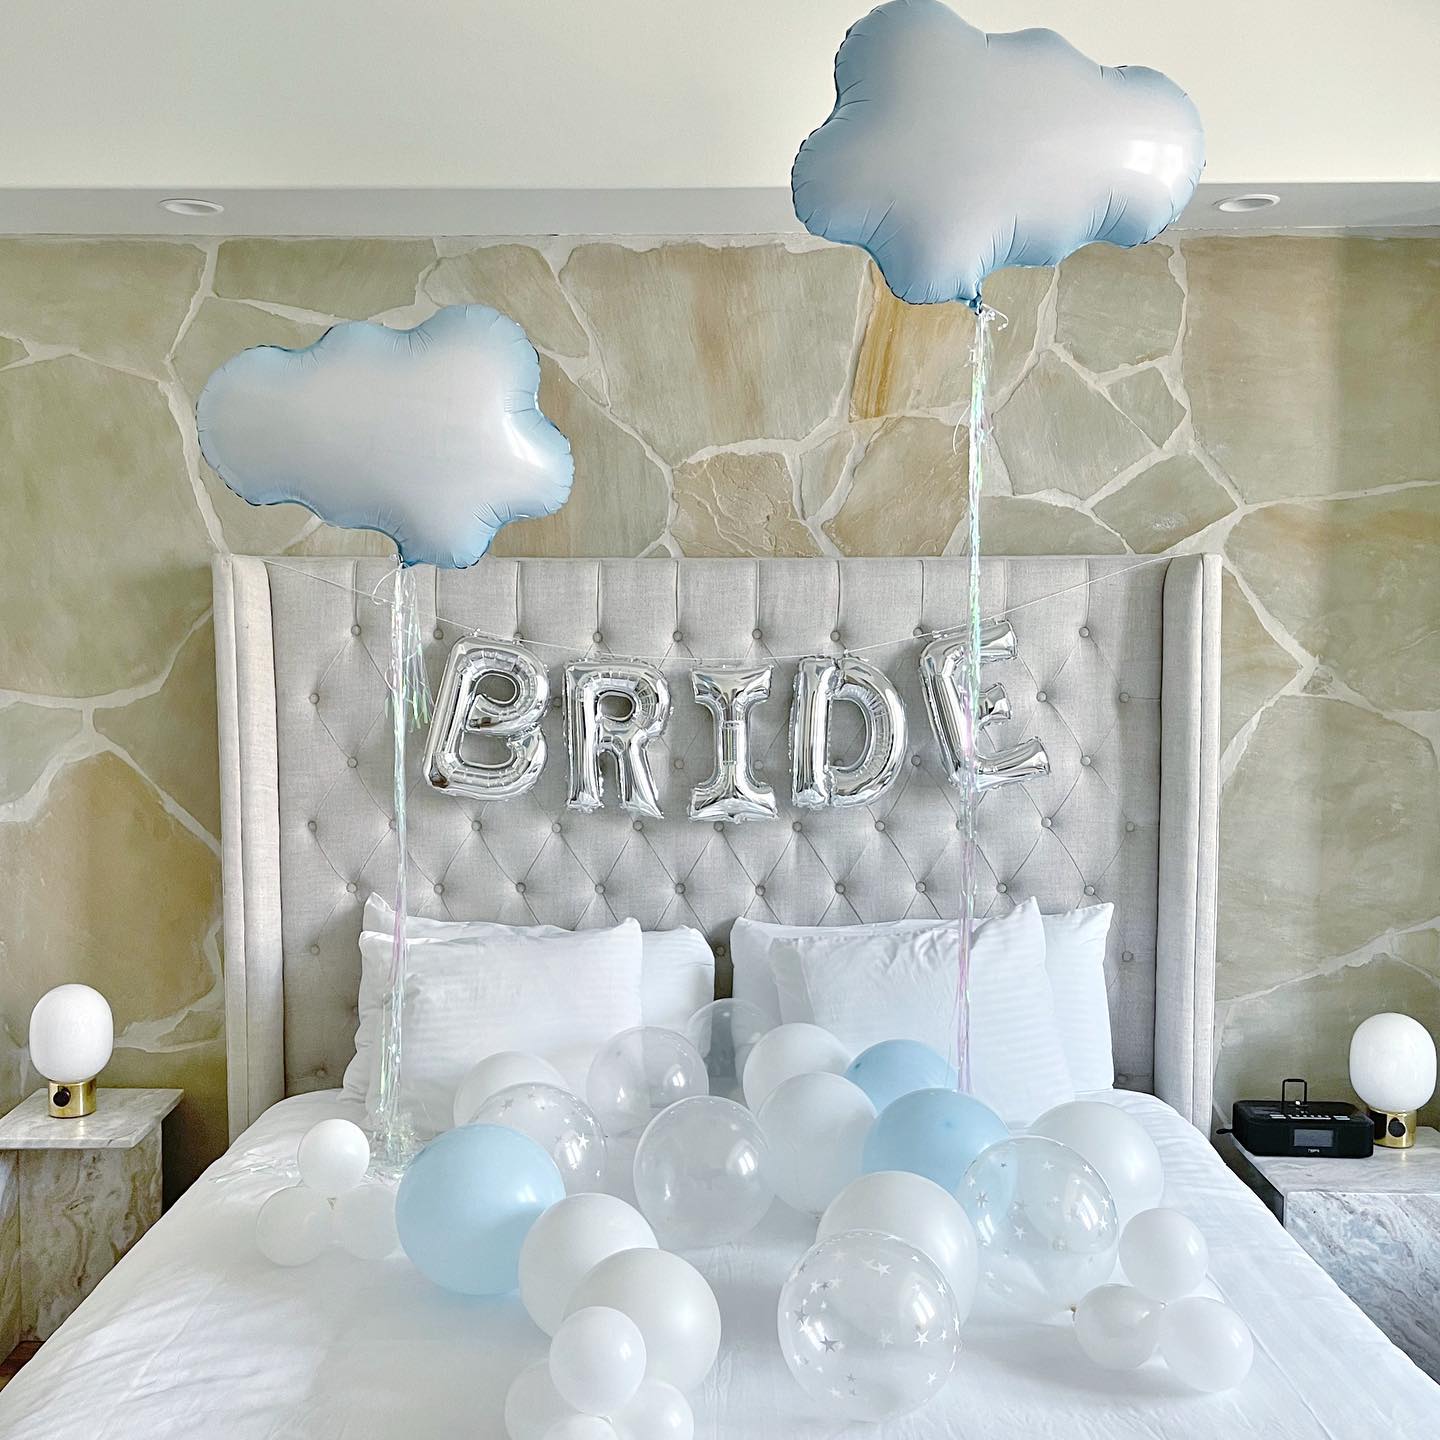 This bride is on cloud nine! ☁️ 

#brideoncloudnine #bacheloretteparty #30abachelorette #alysbeachbach #bridetobe #balloon #heliumballoons